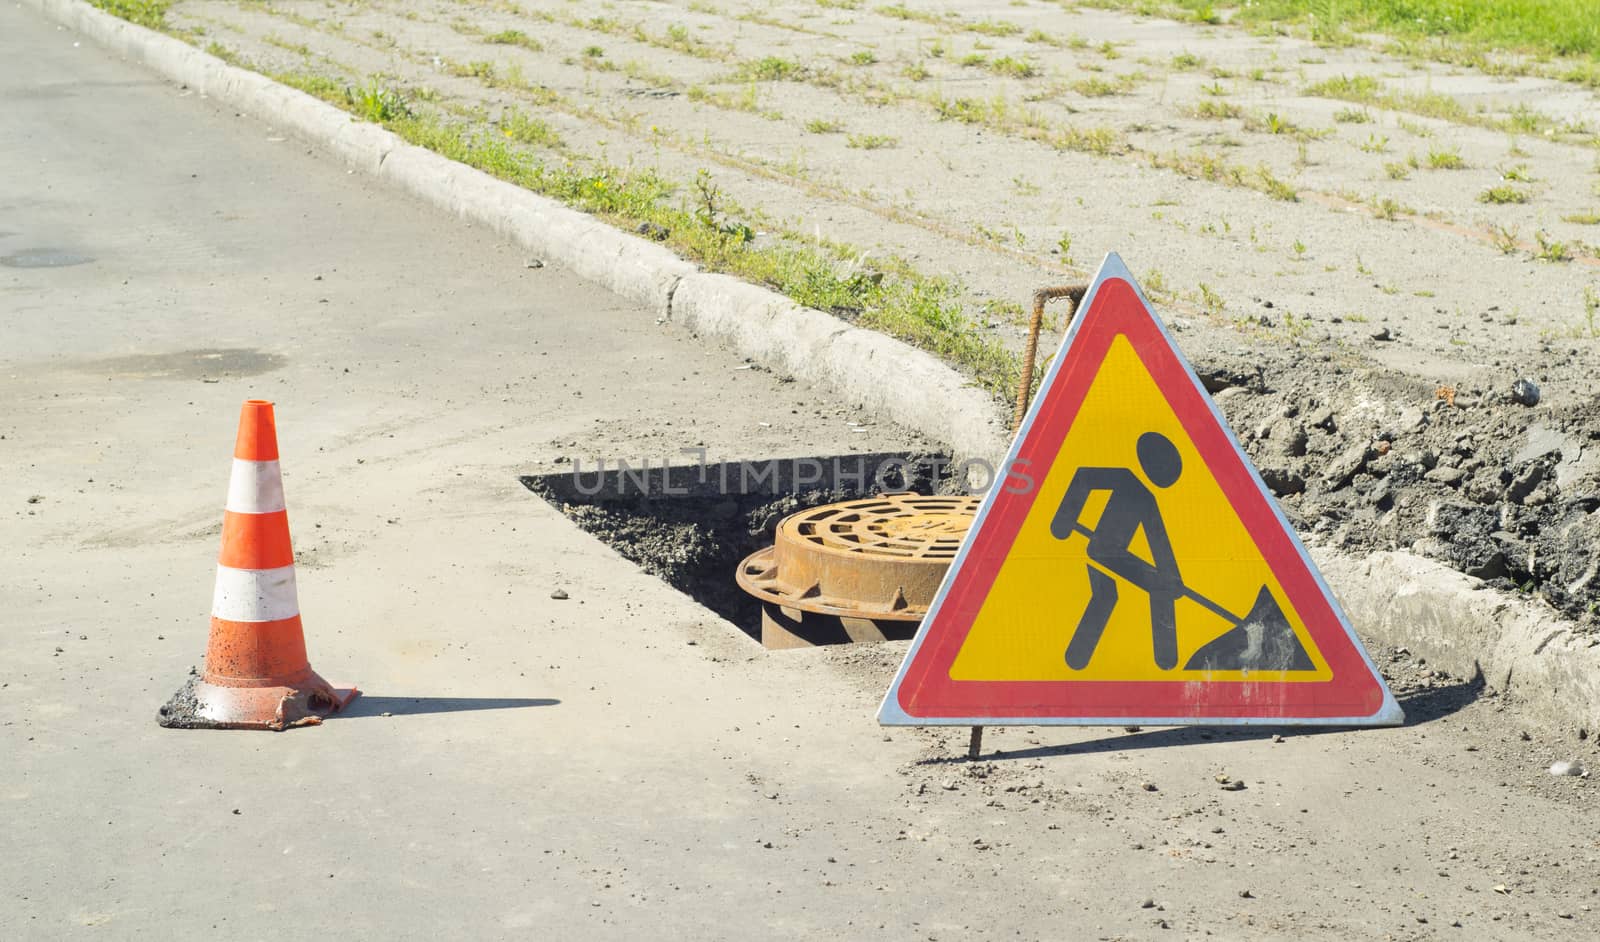 signs of road repair and sidewalk